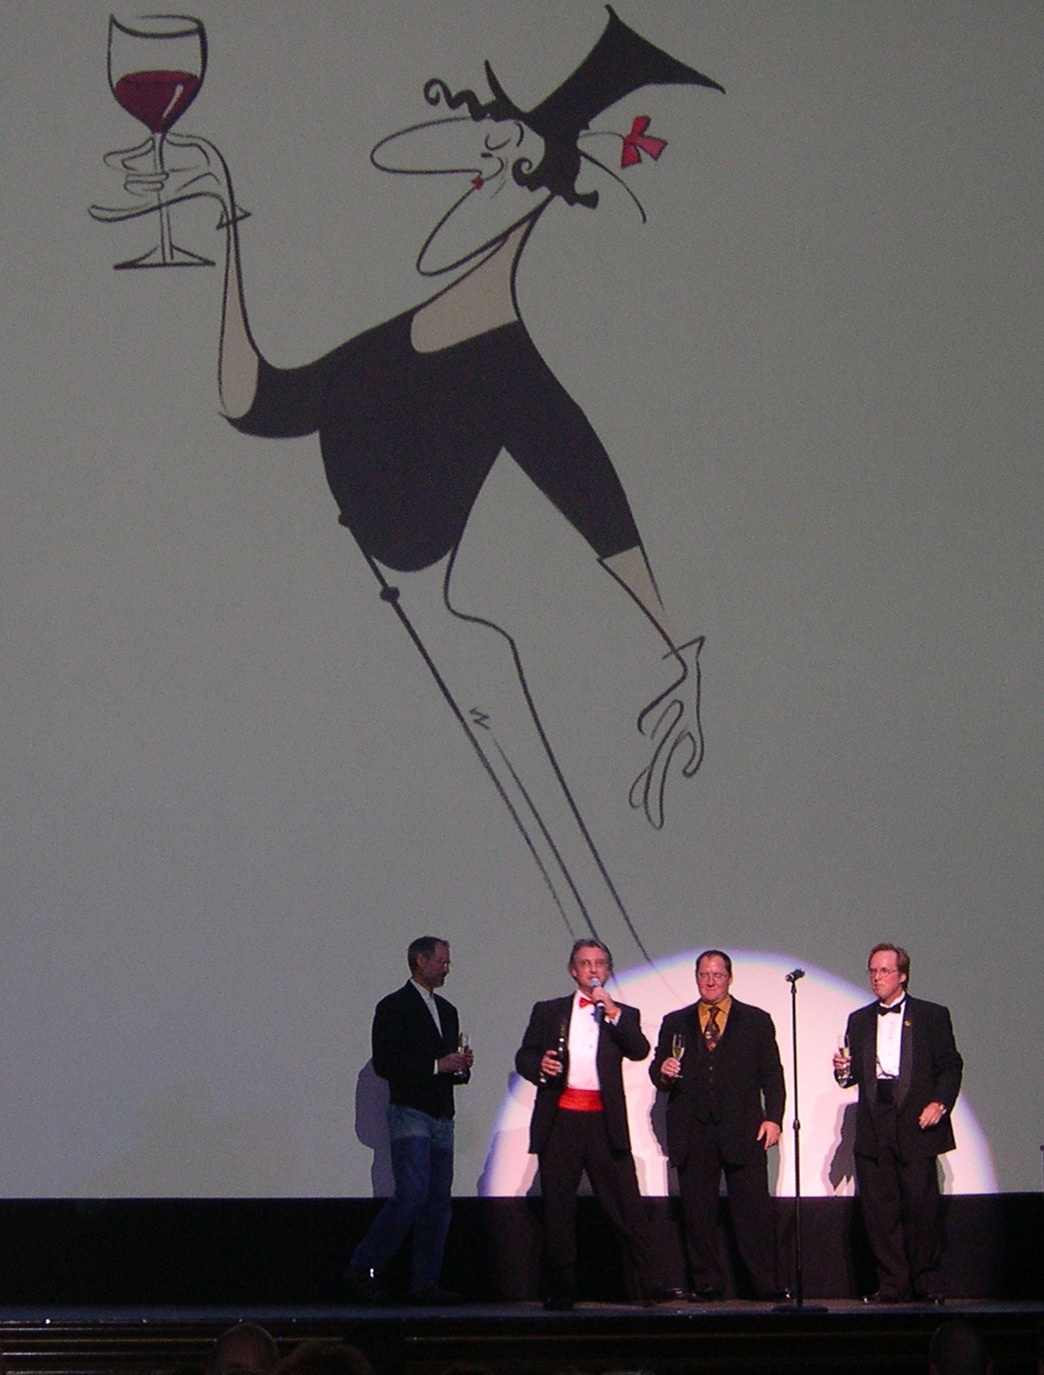 Producer John Walker introducing THE INCREDIBLES at the PIXAR wrap party screening. With Steve Jobs, John Lasseter and Brad Bird.